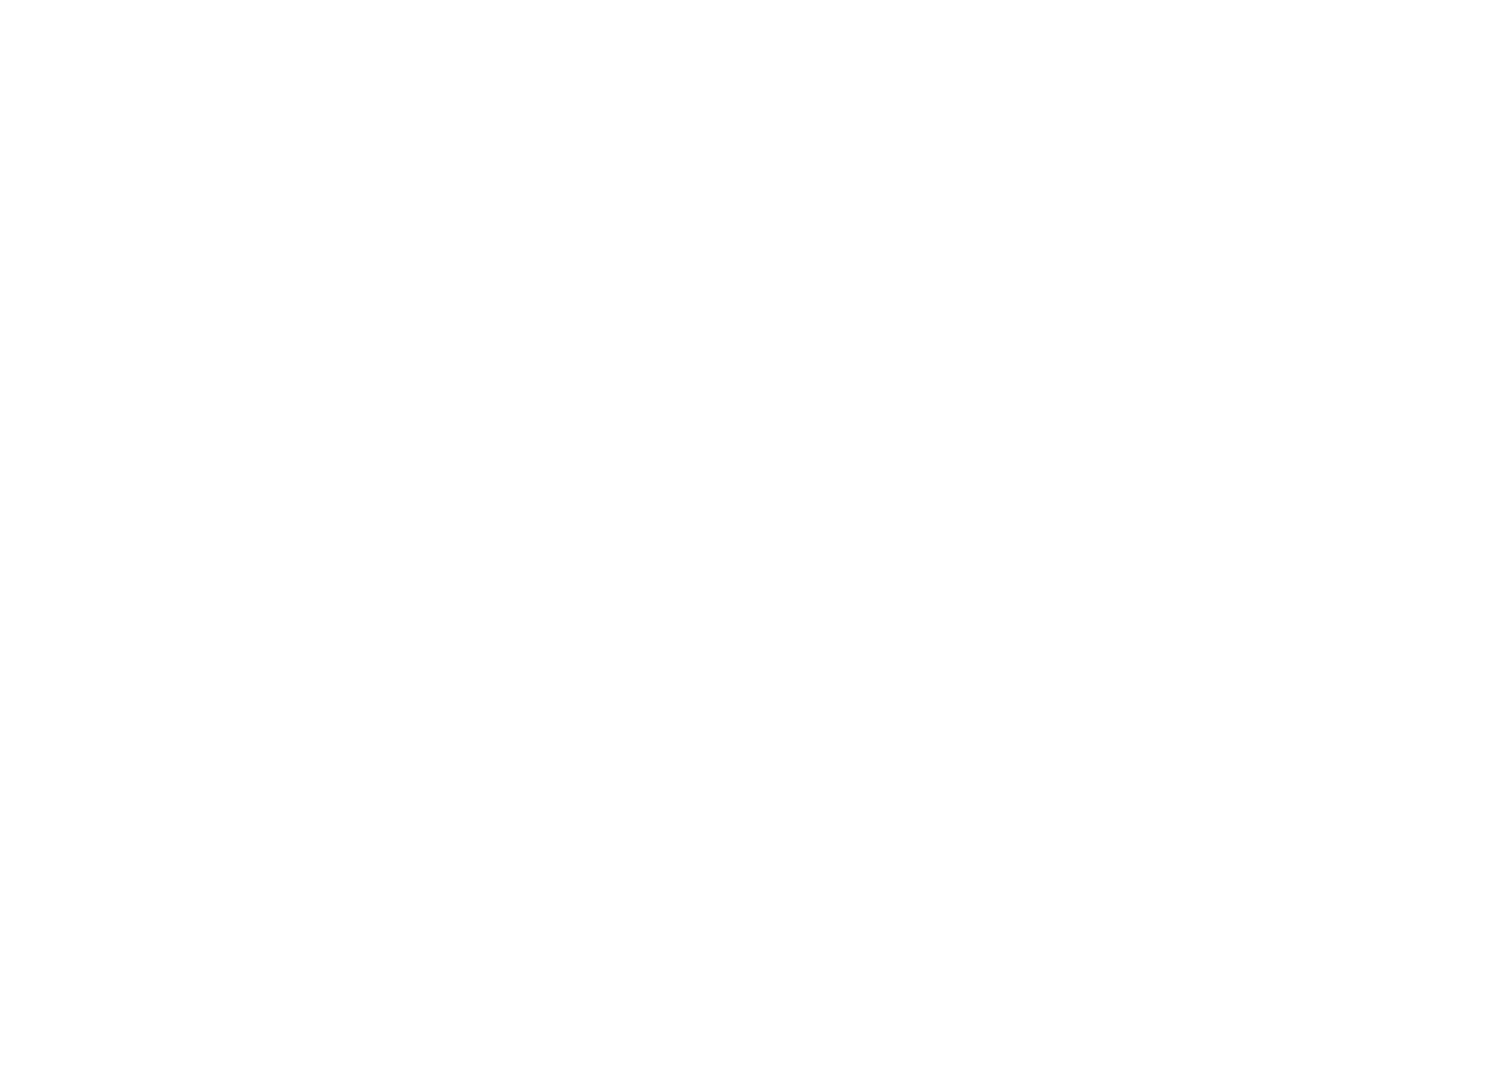 BAKER CO. LEATHERWORKS